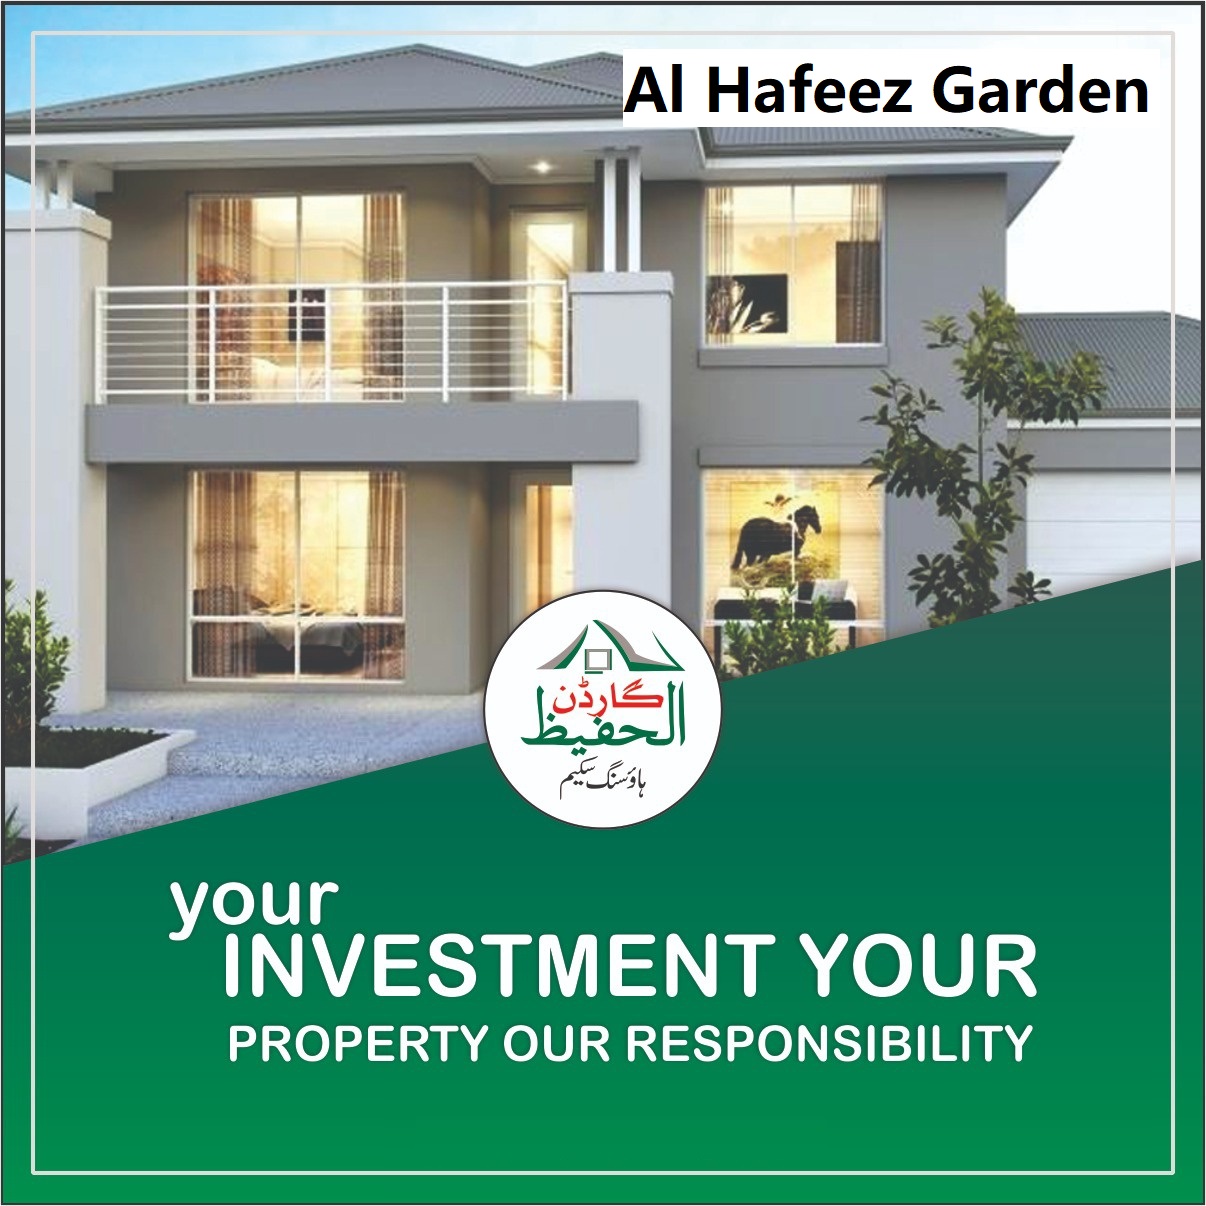 Al Hafeez Garden Lahore Investment Opportunity